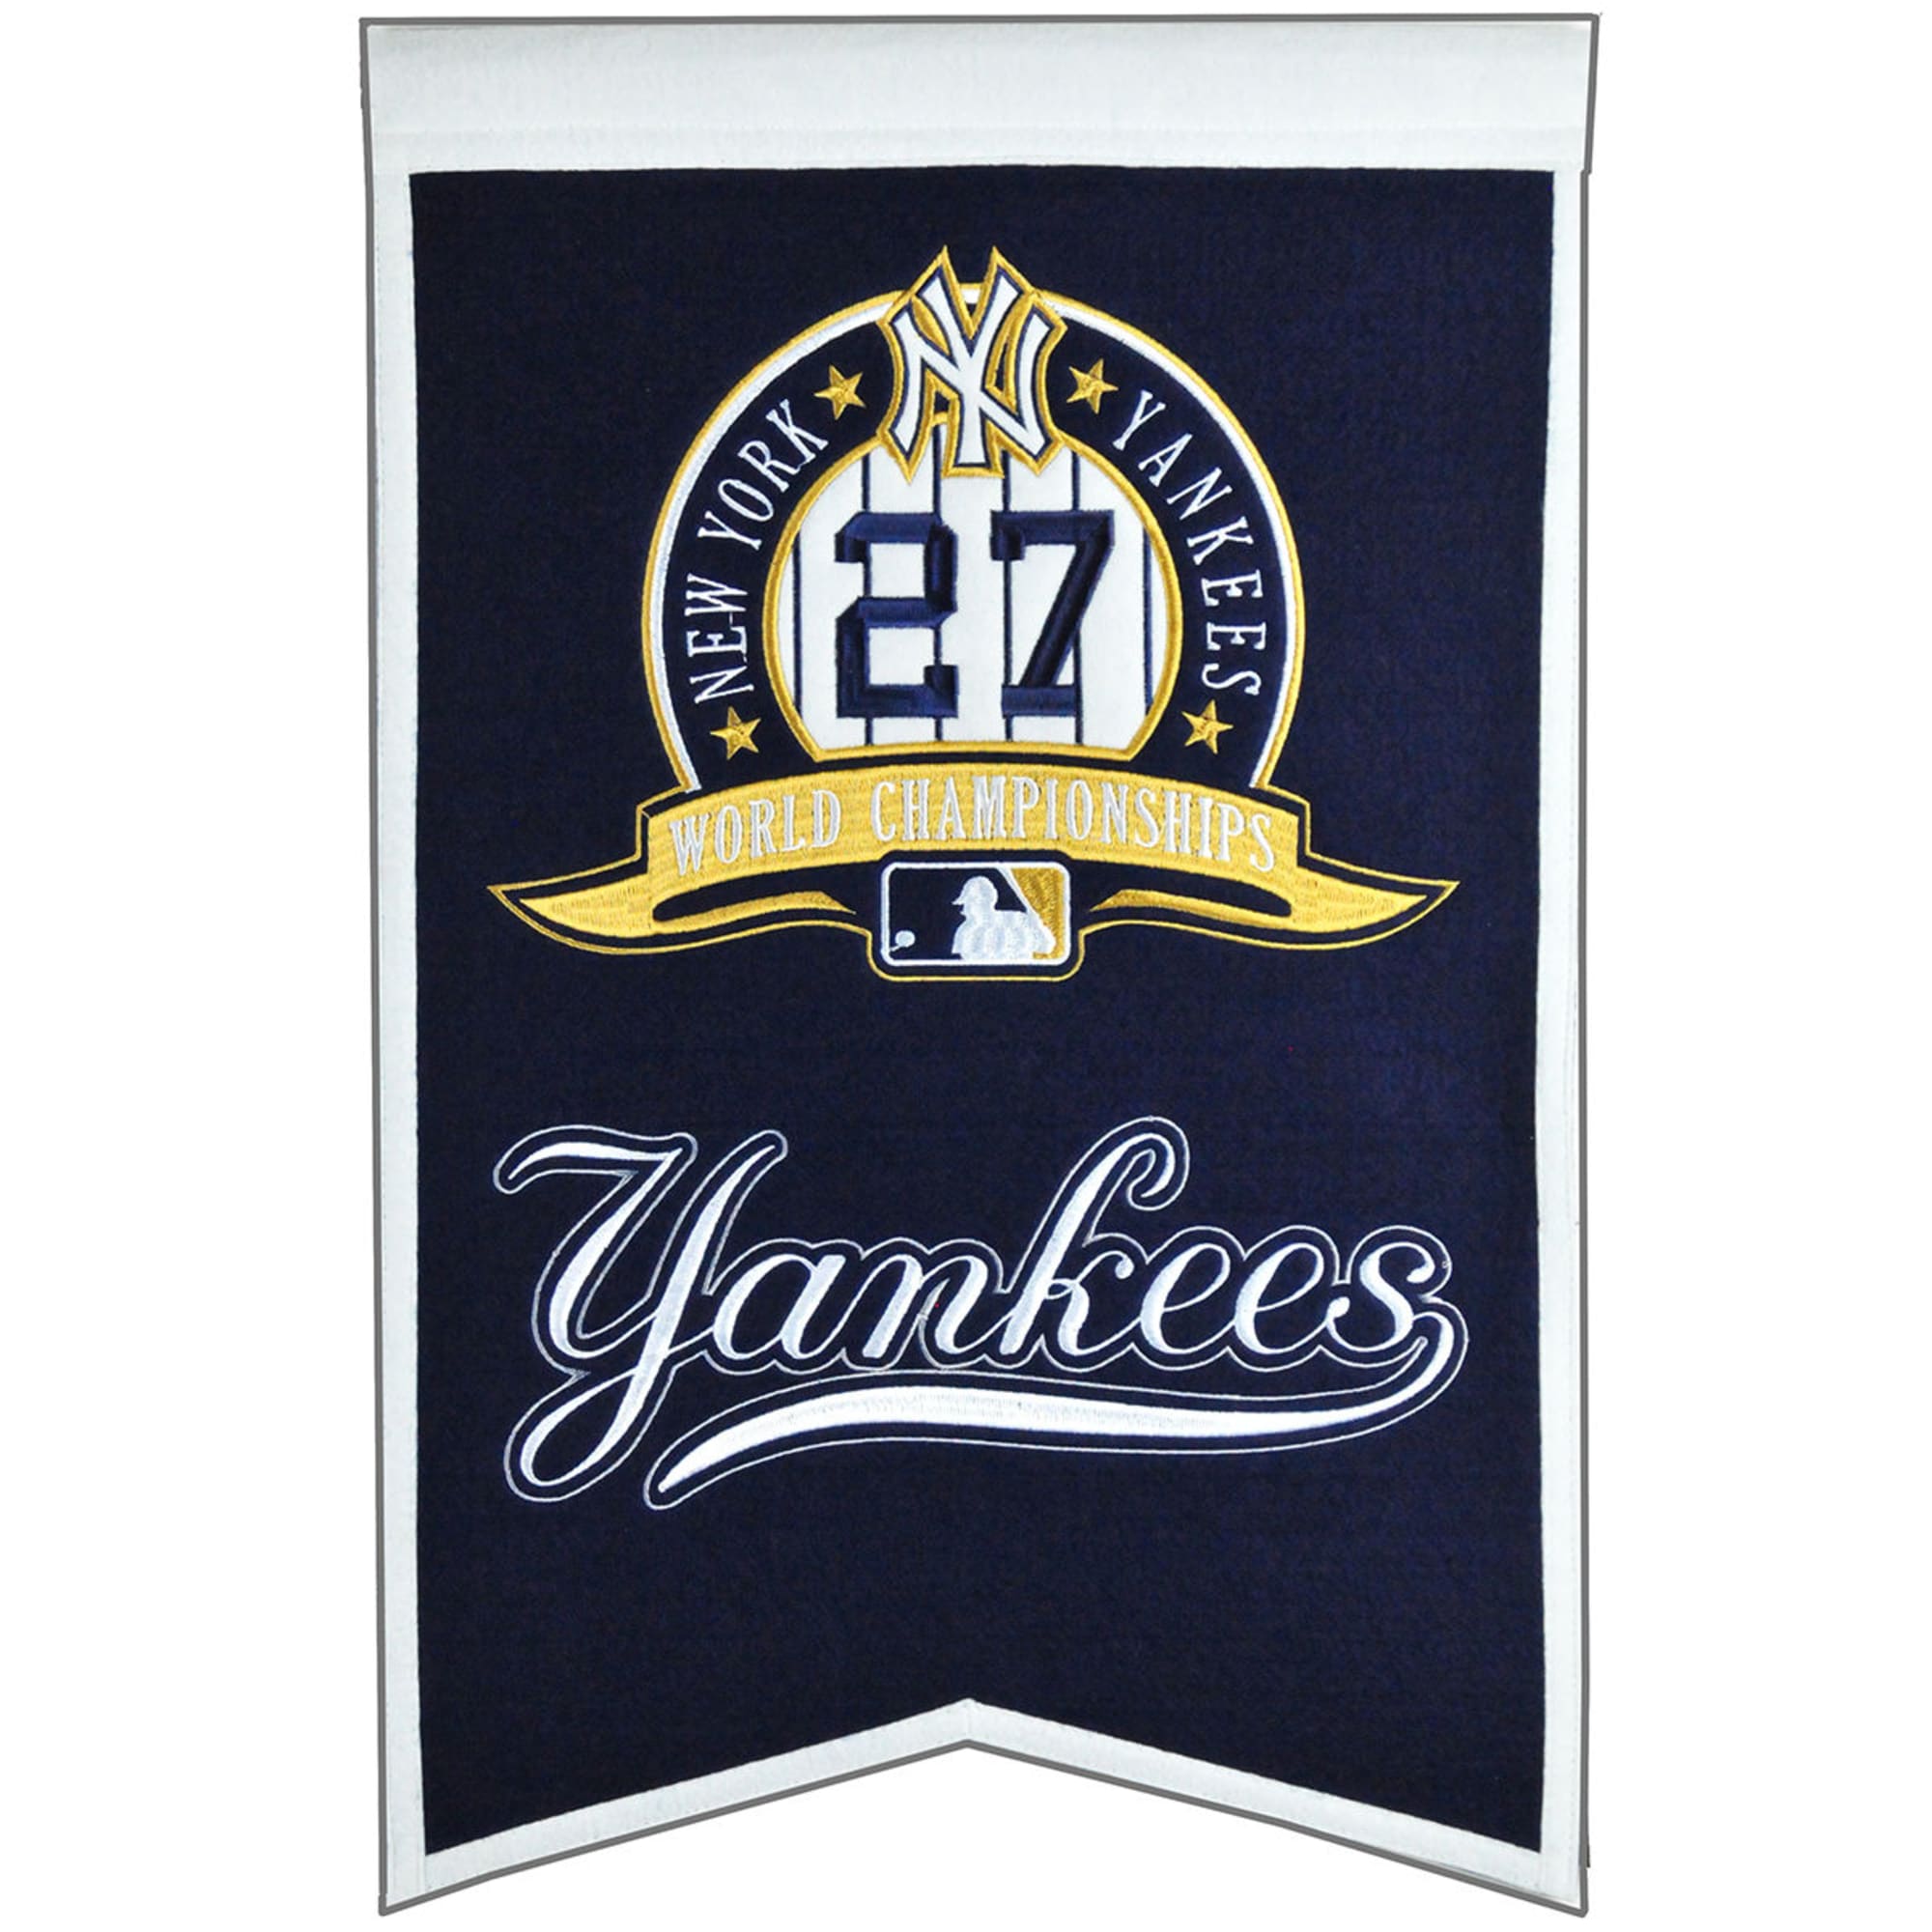 Yankees' World Series championship commemorated on new print - Beckett News